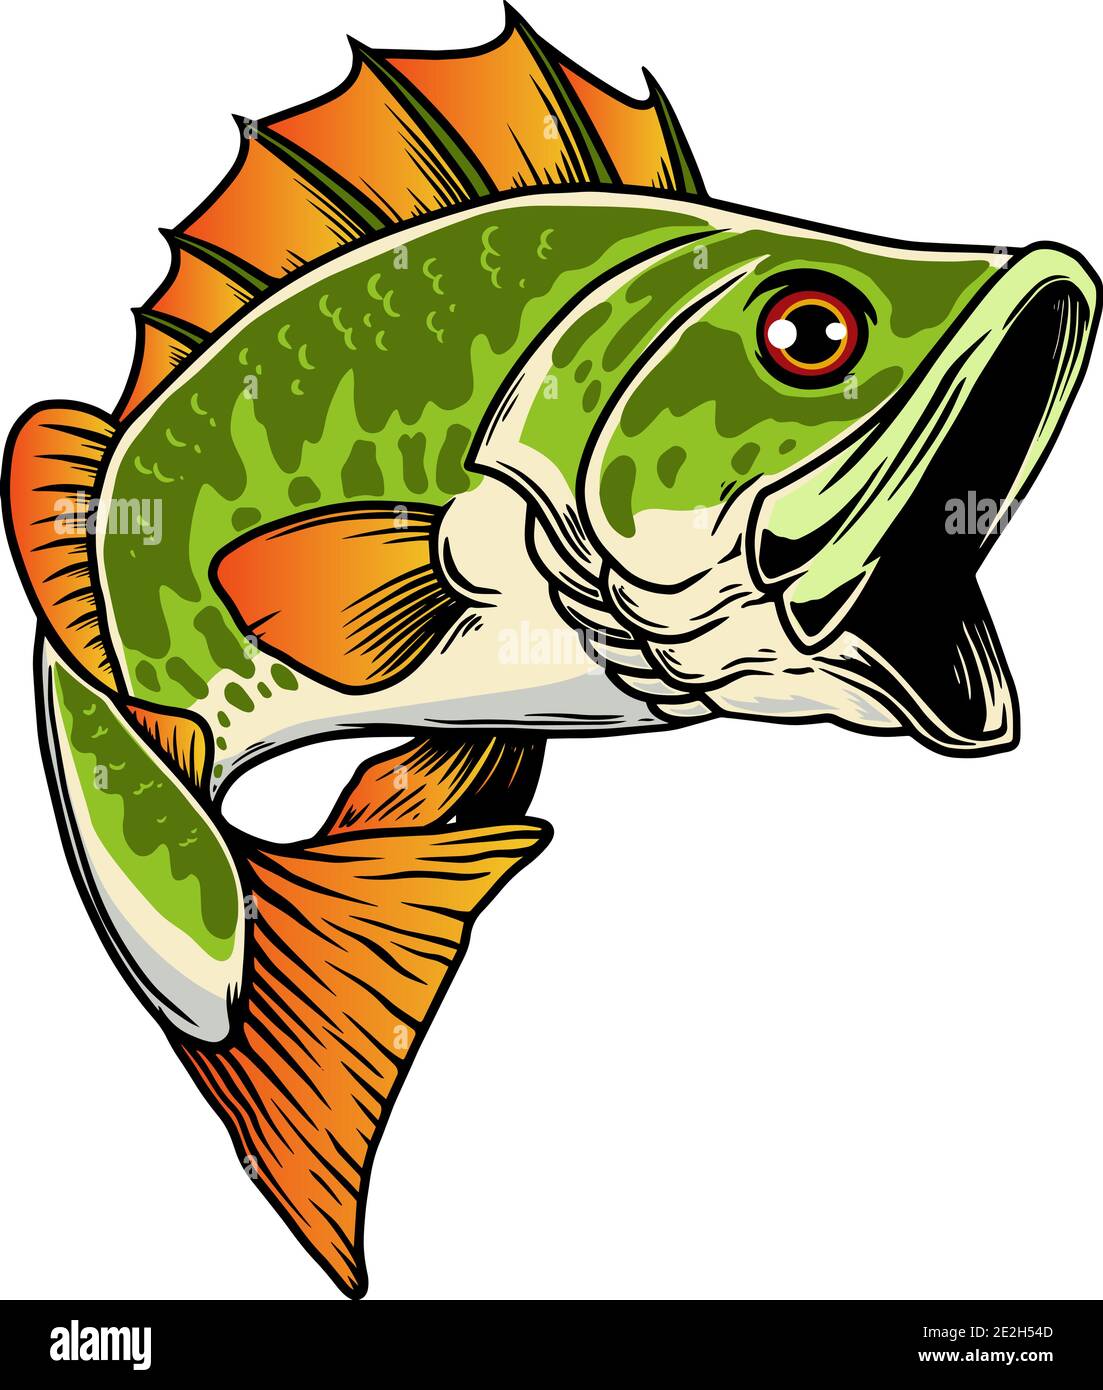 Illustration of bass fish. Big perch. Perch fishing. Design